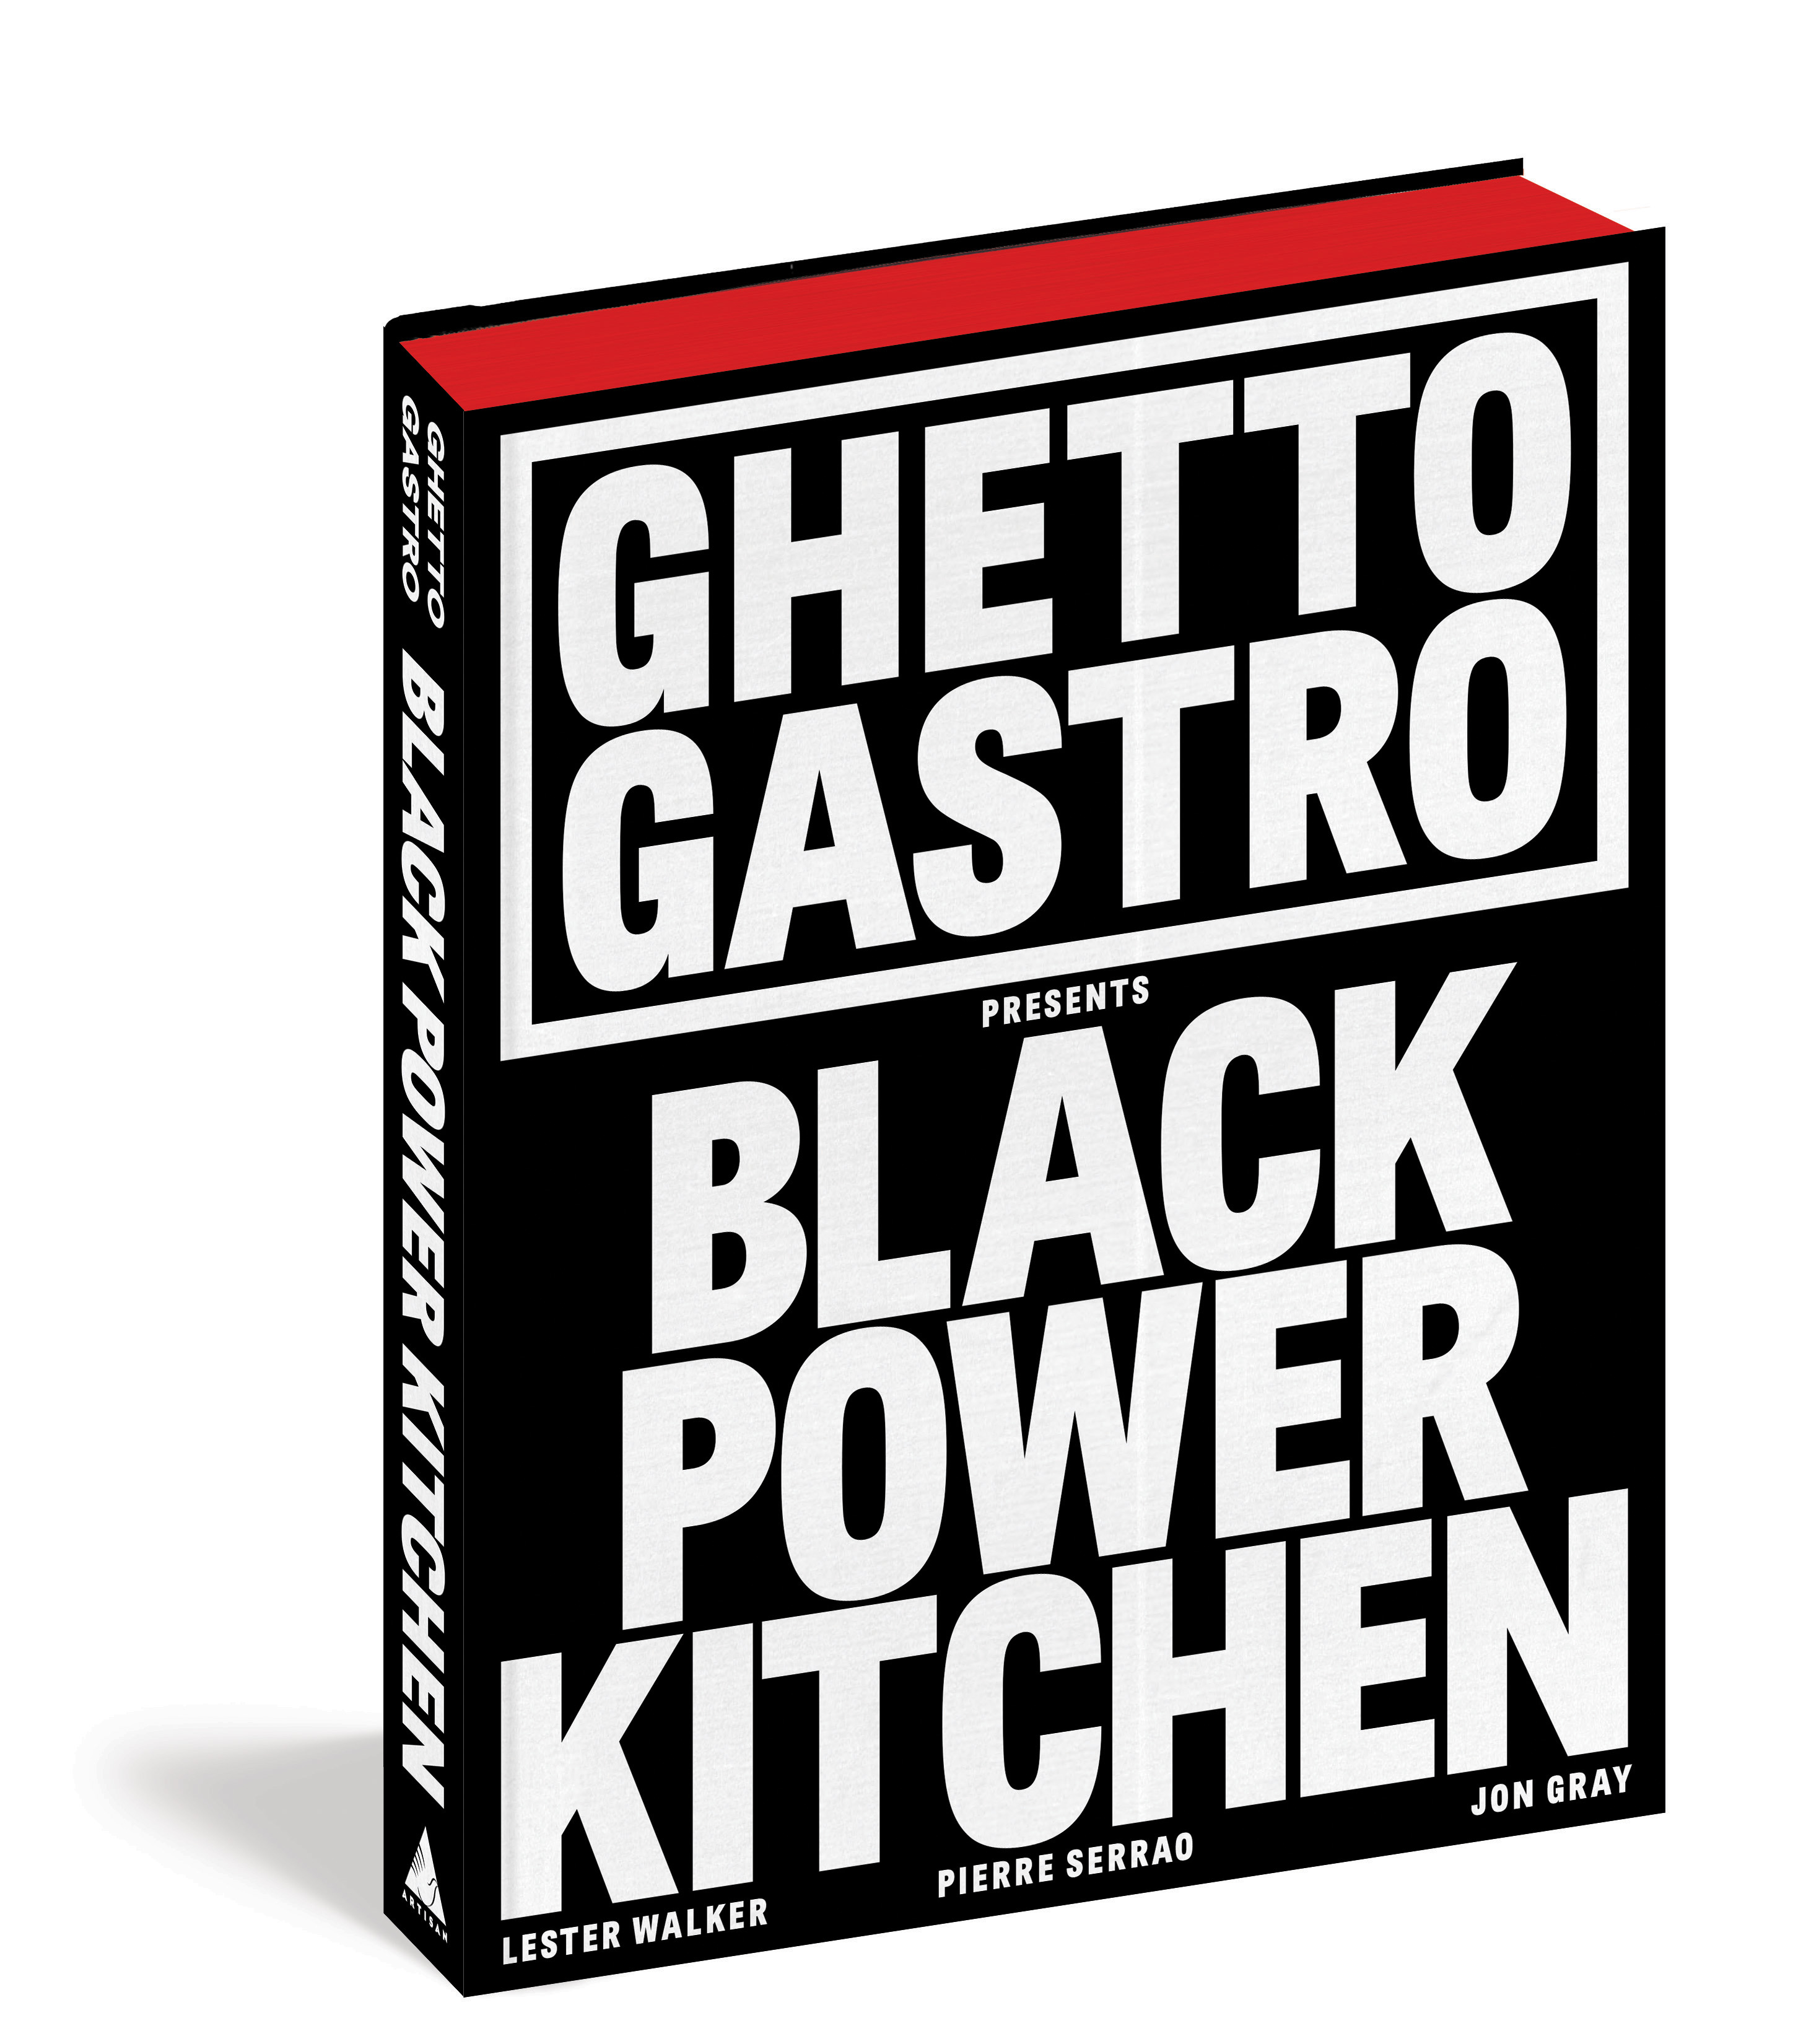 3D_COVER_Ghetto_Gastro_Presents_Black_Power_Kitchen_by_Jon_Gray,_Pierre_Serrao,_and_Lester_Walker.jpg